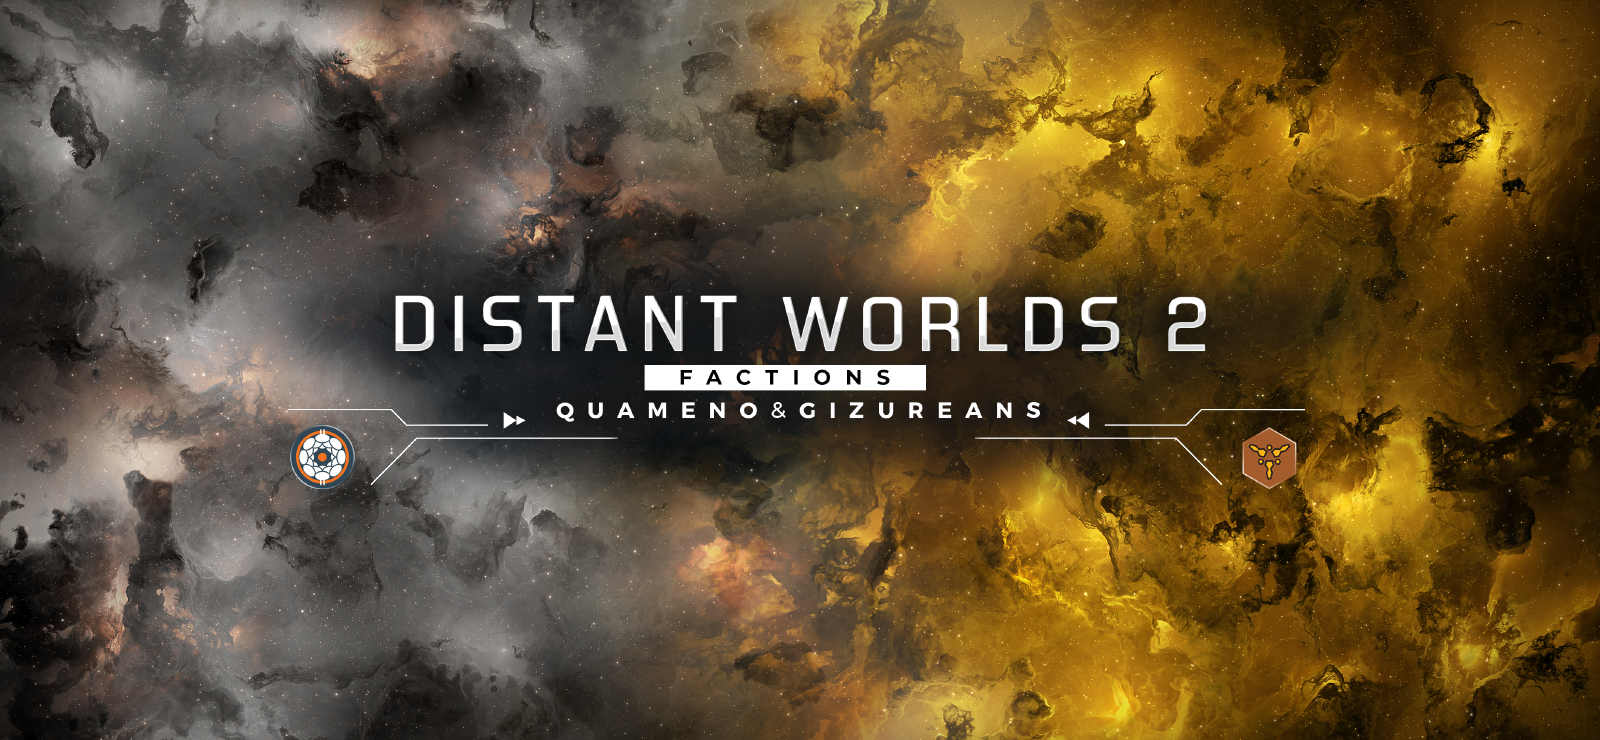 Distant Worlds 2: Factions - Quameno And Gizureans